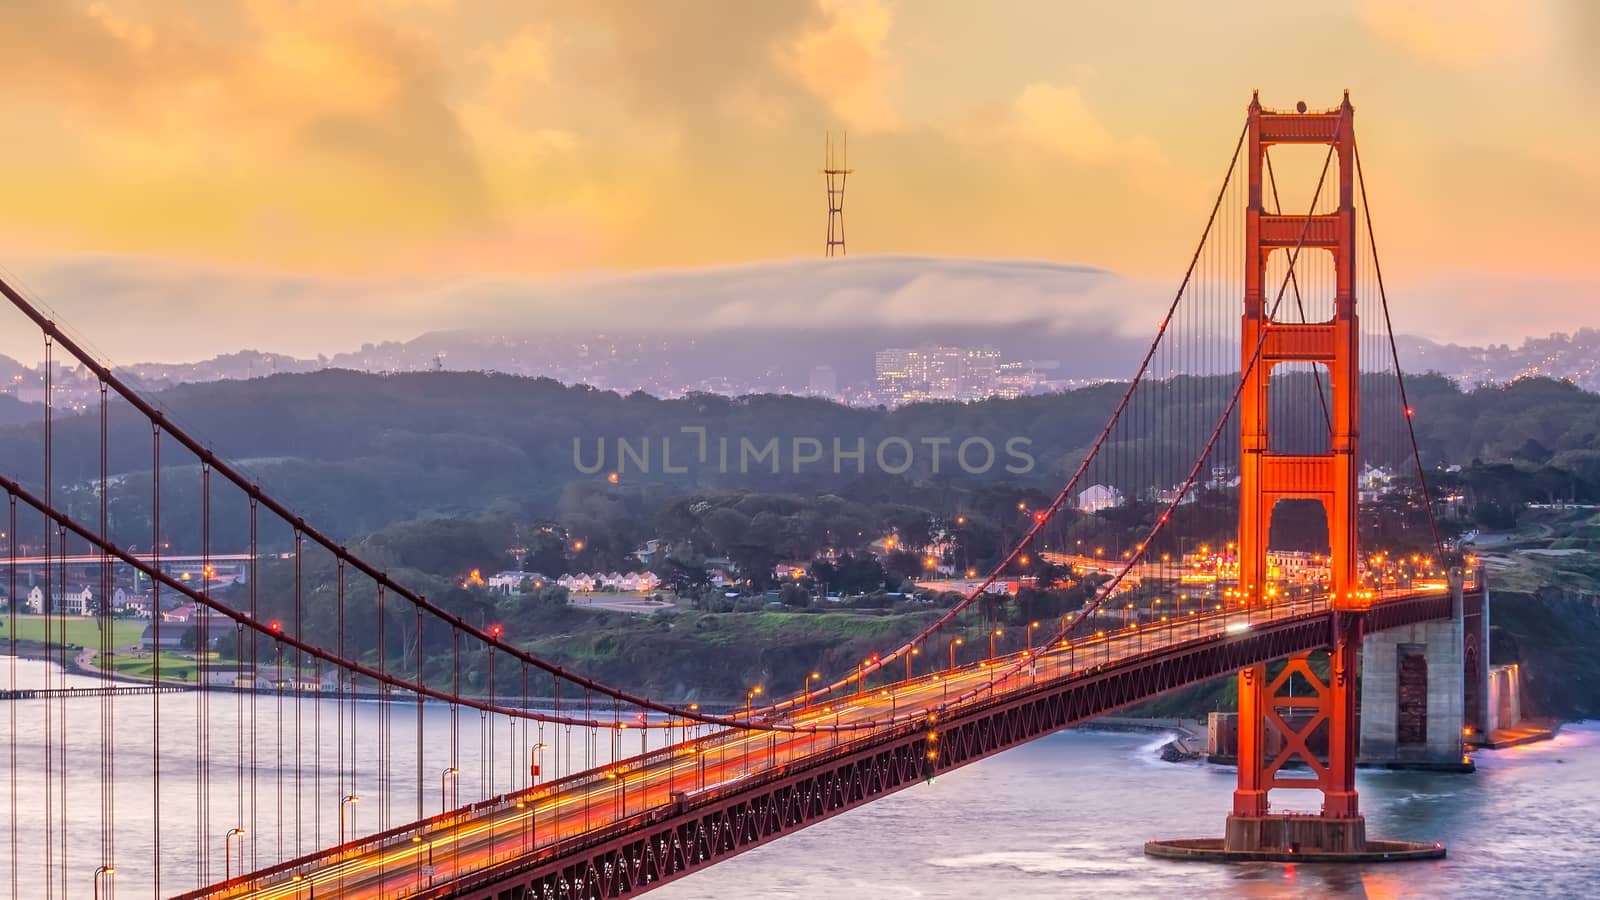 Famous Golden Gate Bridge, San Francisco at sunset by f11photo